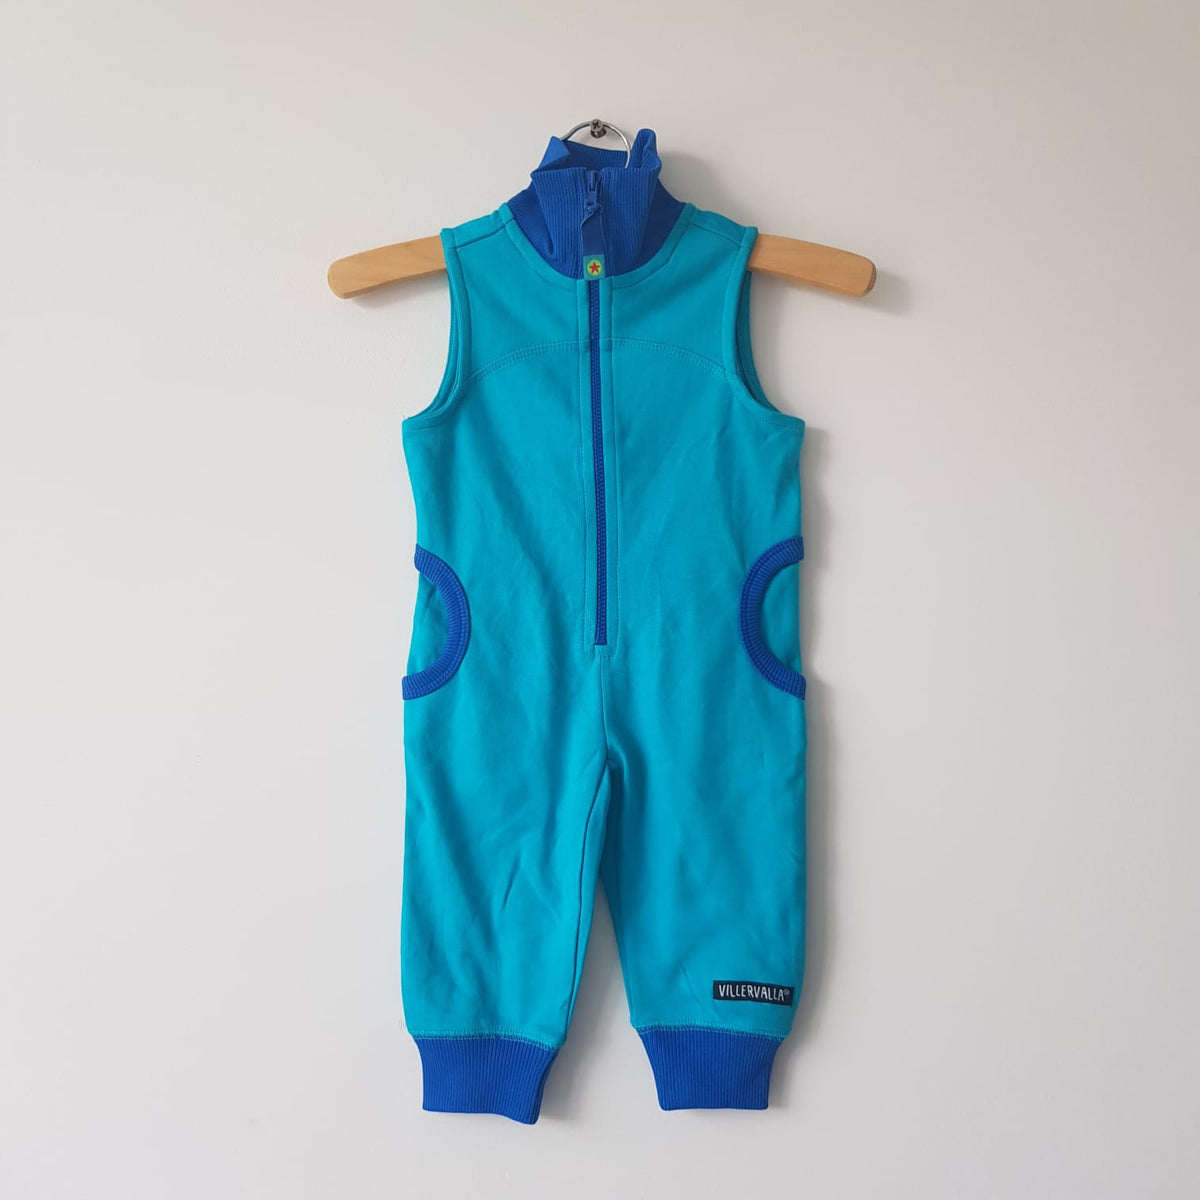 Villervalla - Jumpsuit Overall Sleeveless Azur Blue Pak Azuur blauw